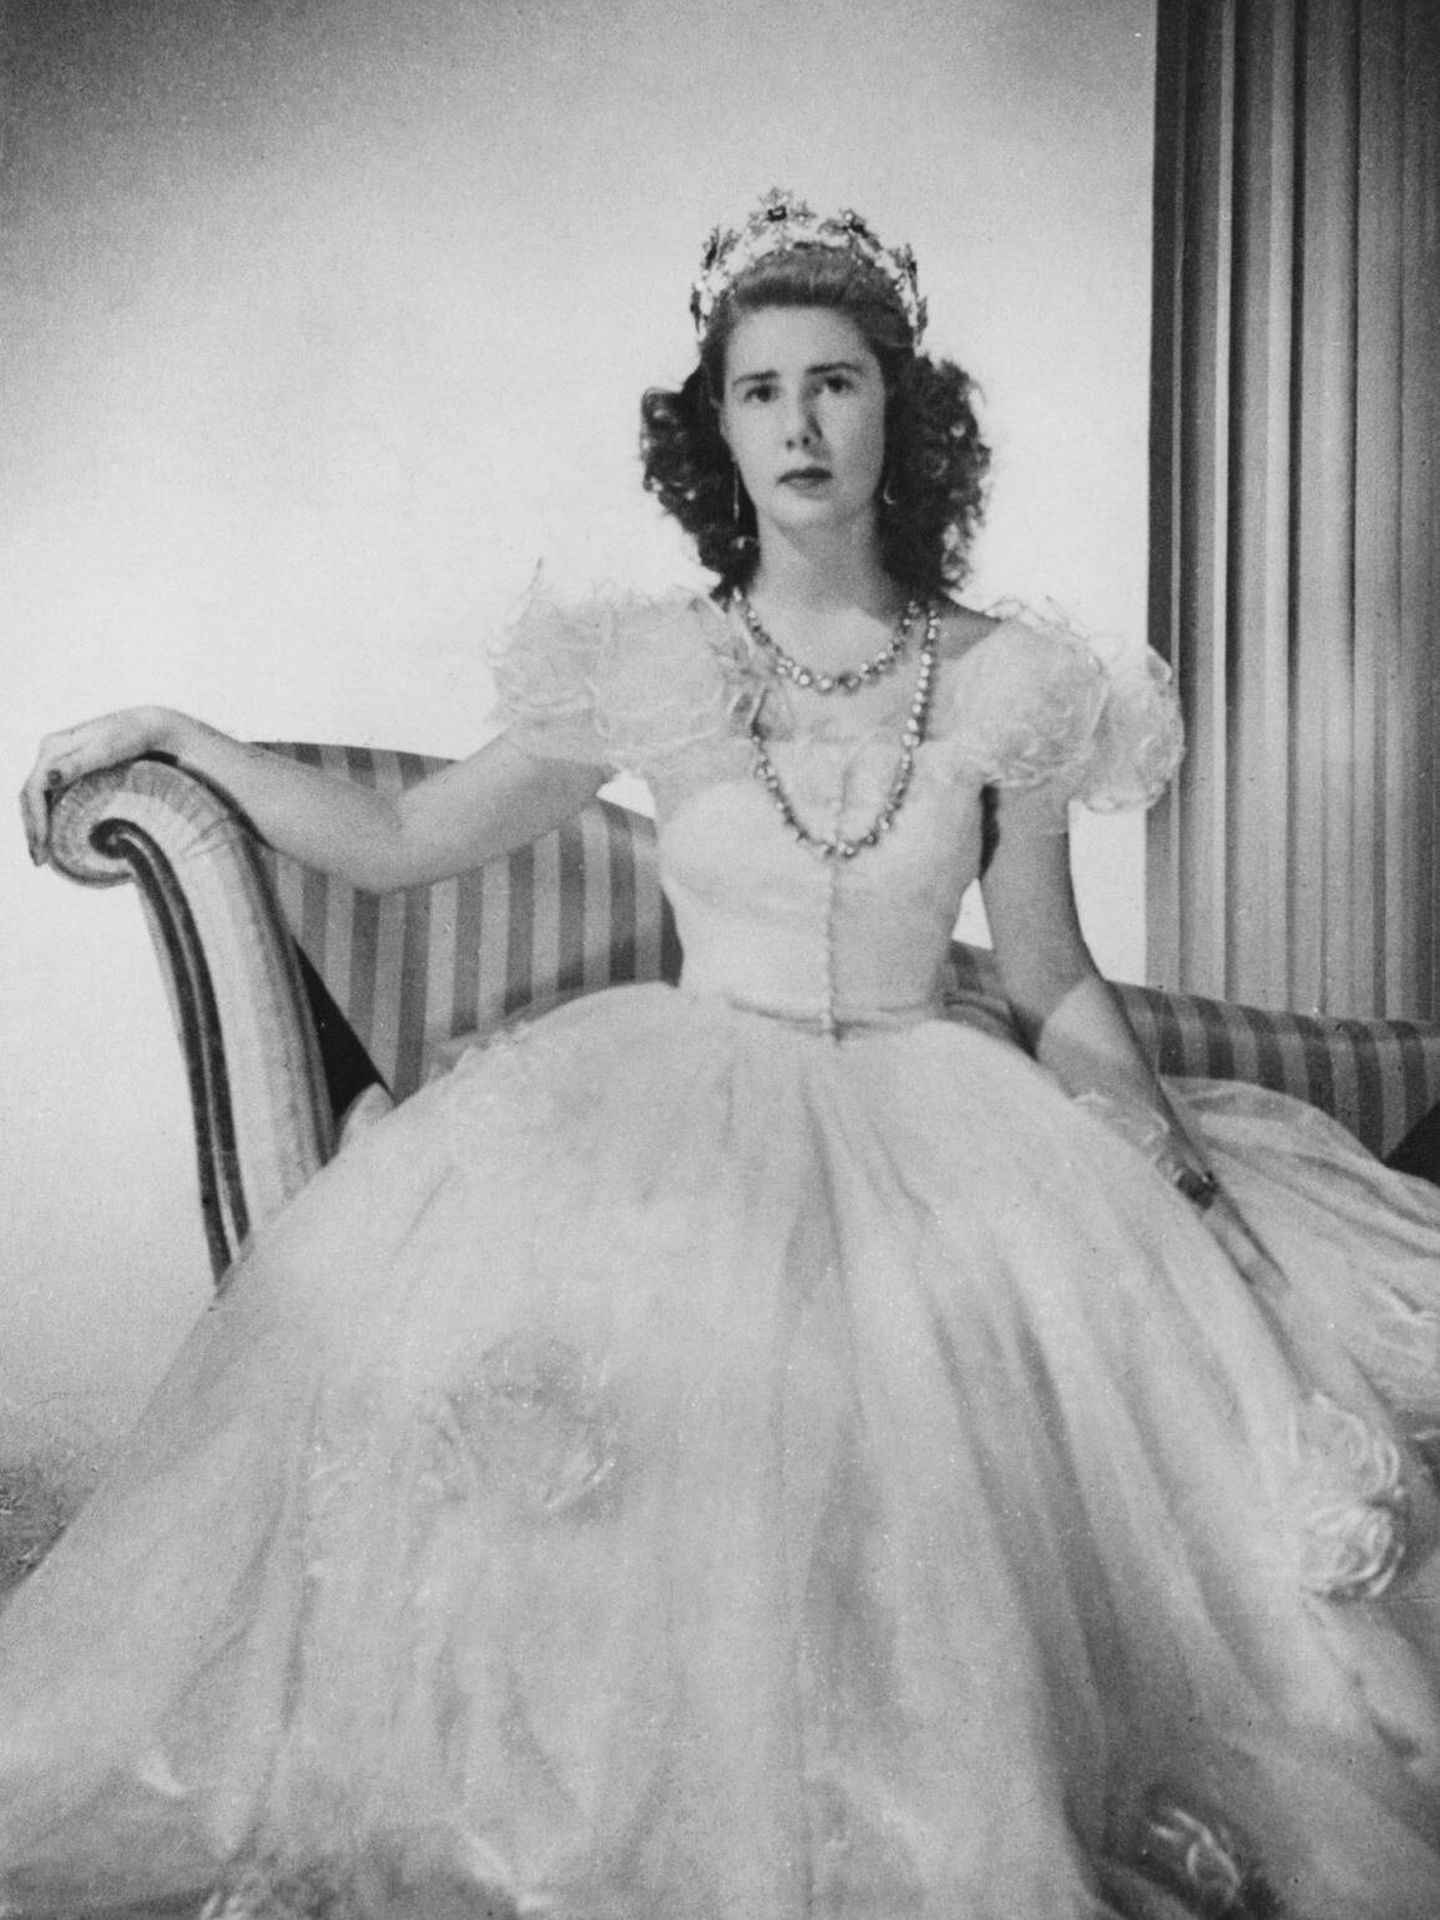 Cayetana de Alba con la corona ducal en 1947. (Hulton Archive/Getty Images)